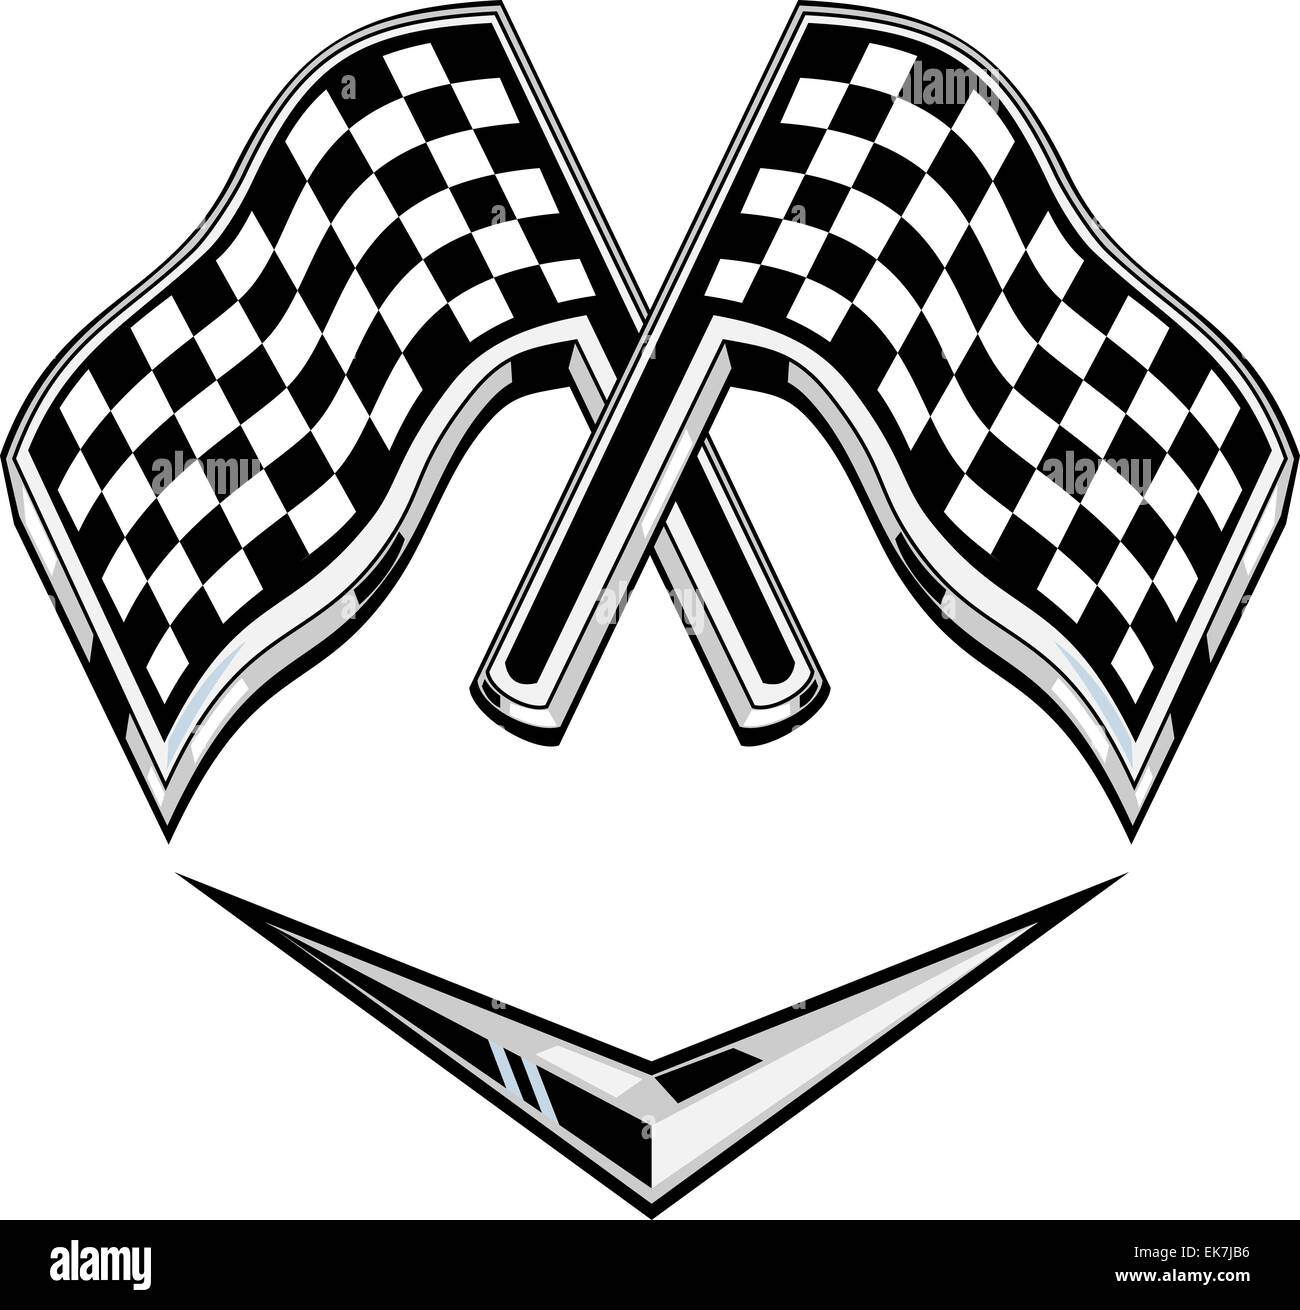 metallic racing checkered flag crossed Stock Photo